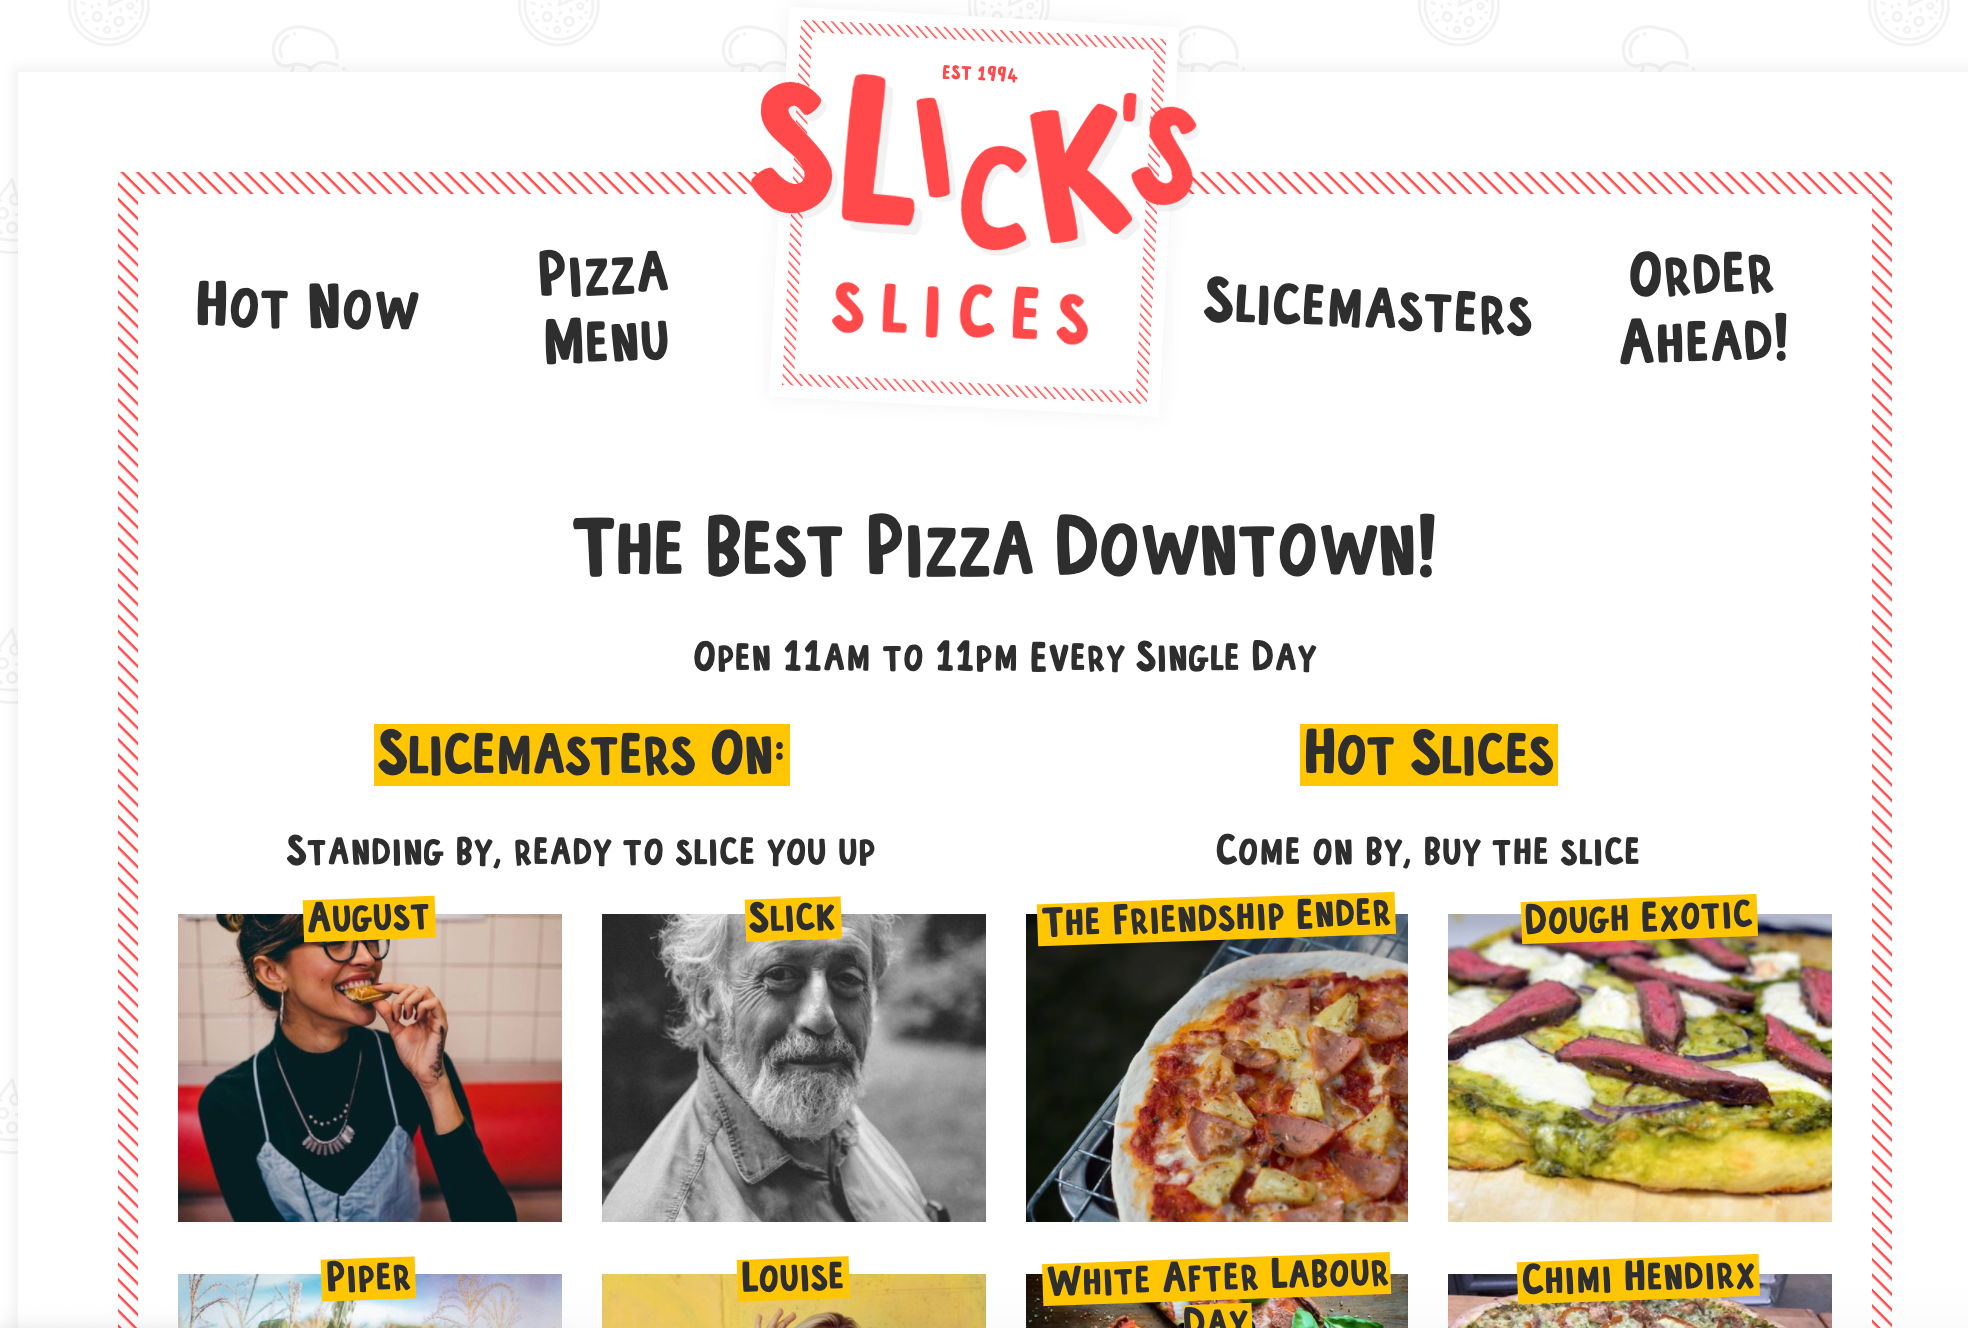 Slick's Slices